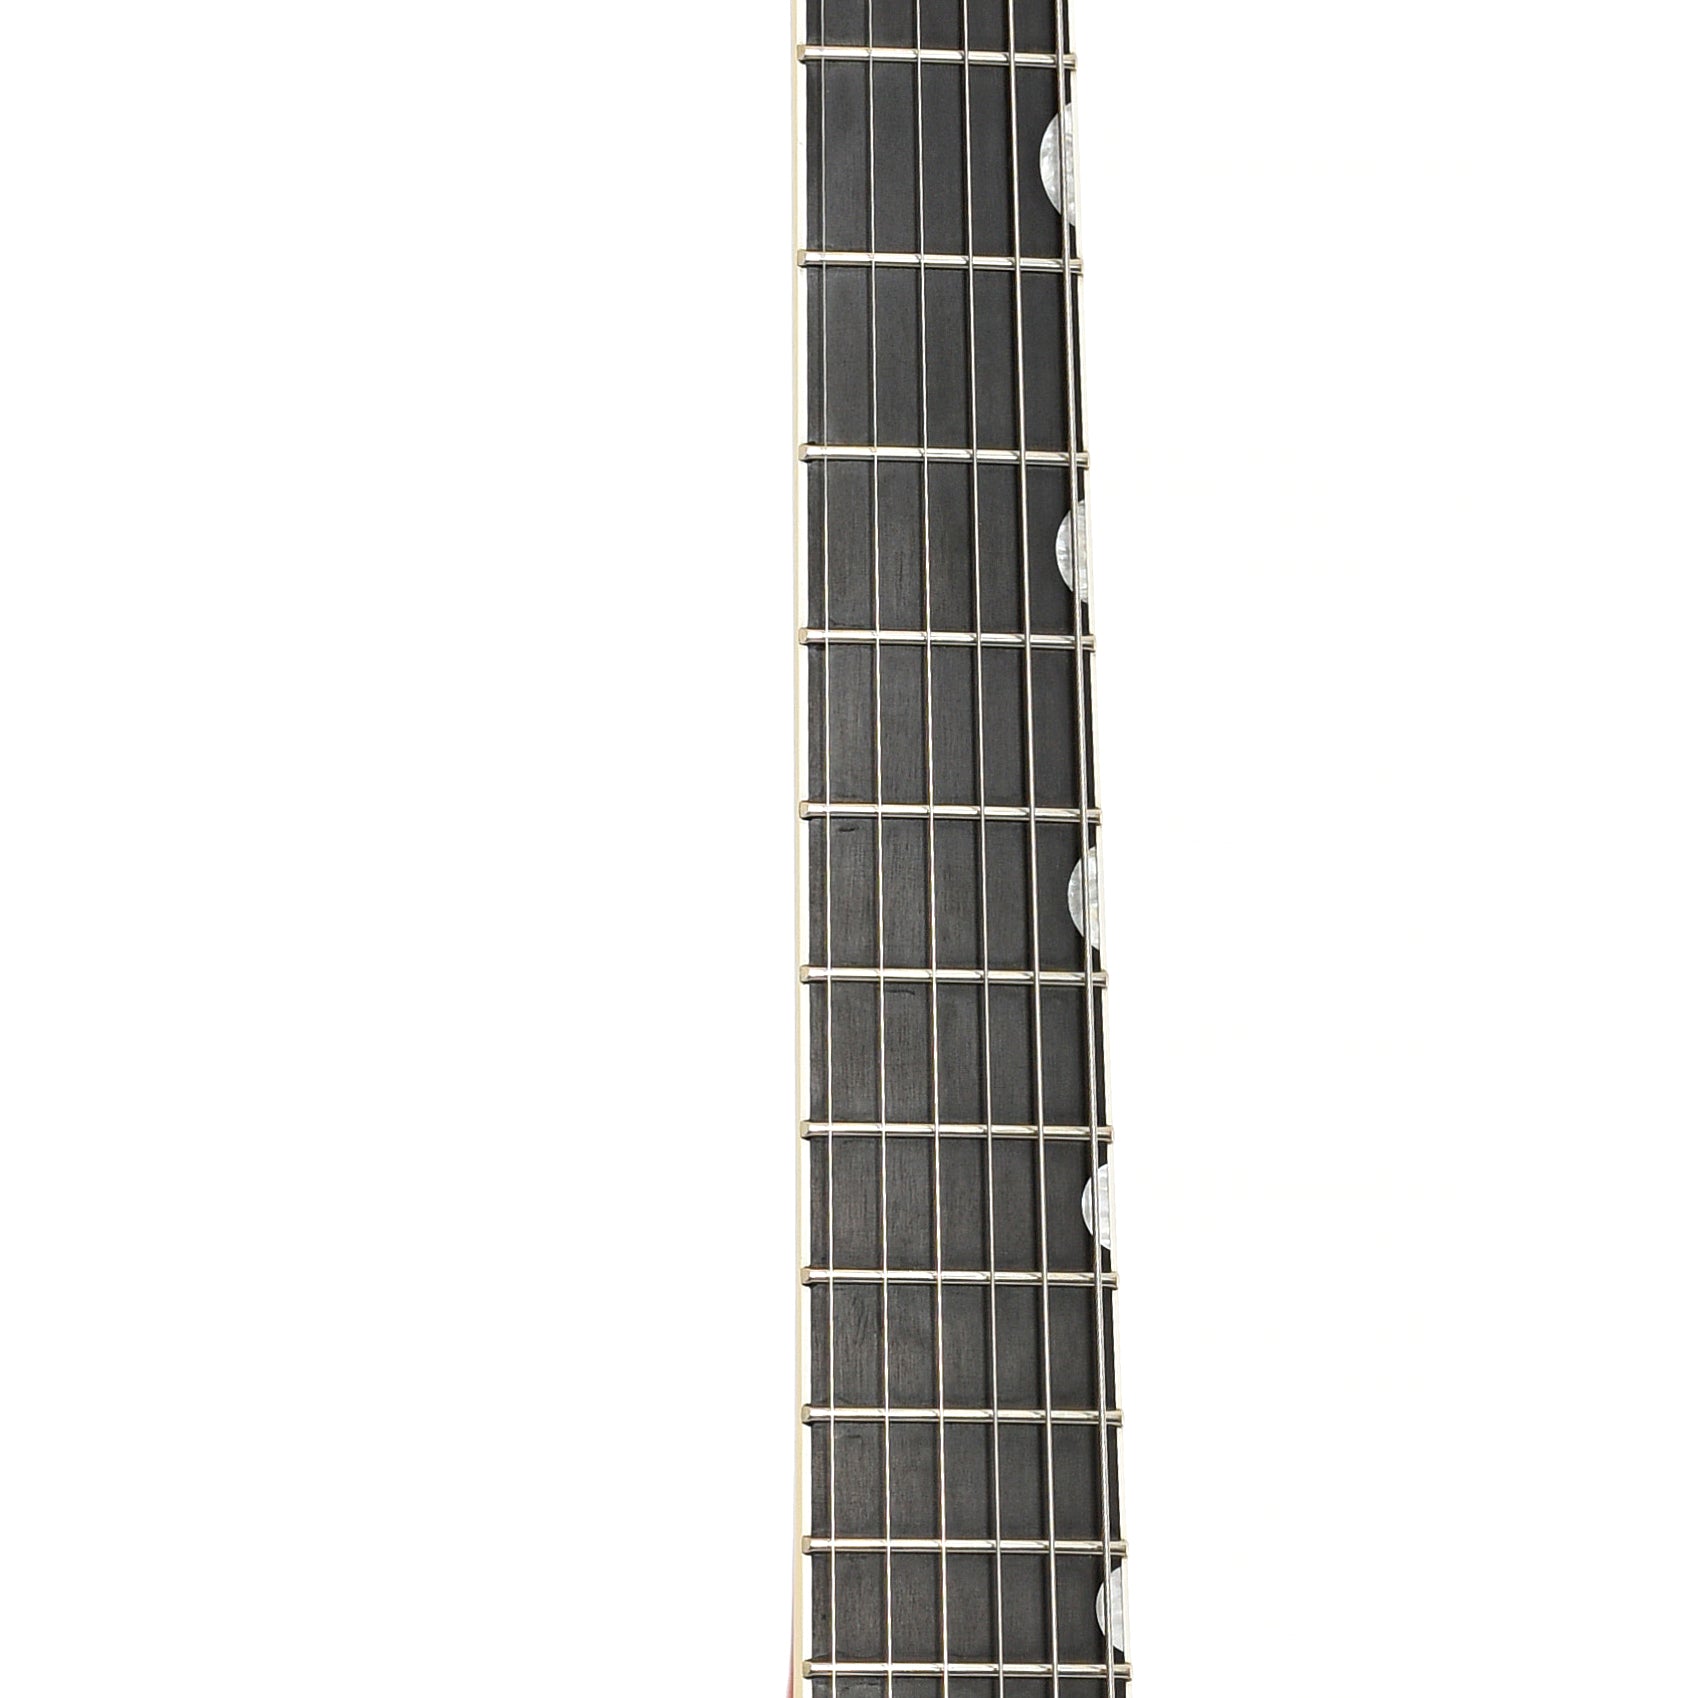 Fretboard of Gretsch G6120 LH Hollowbody Electric Guitar